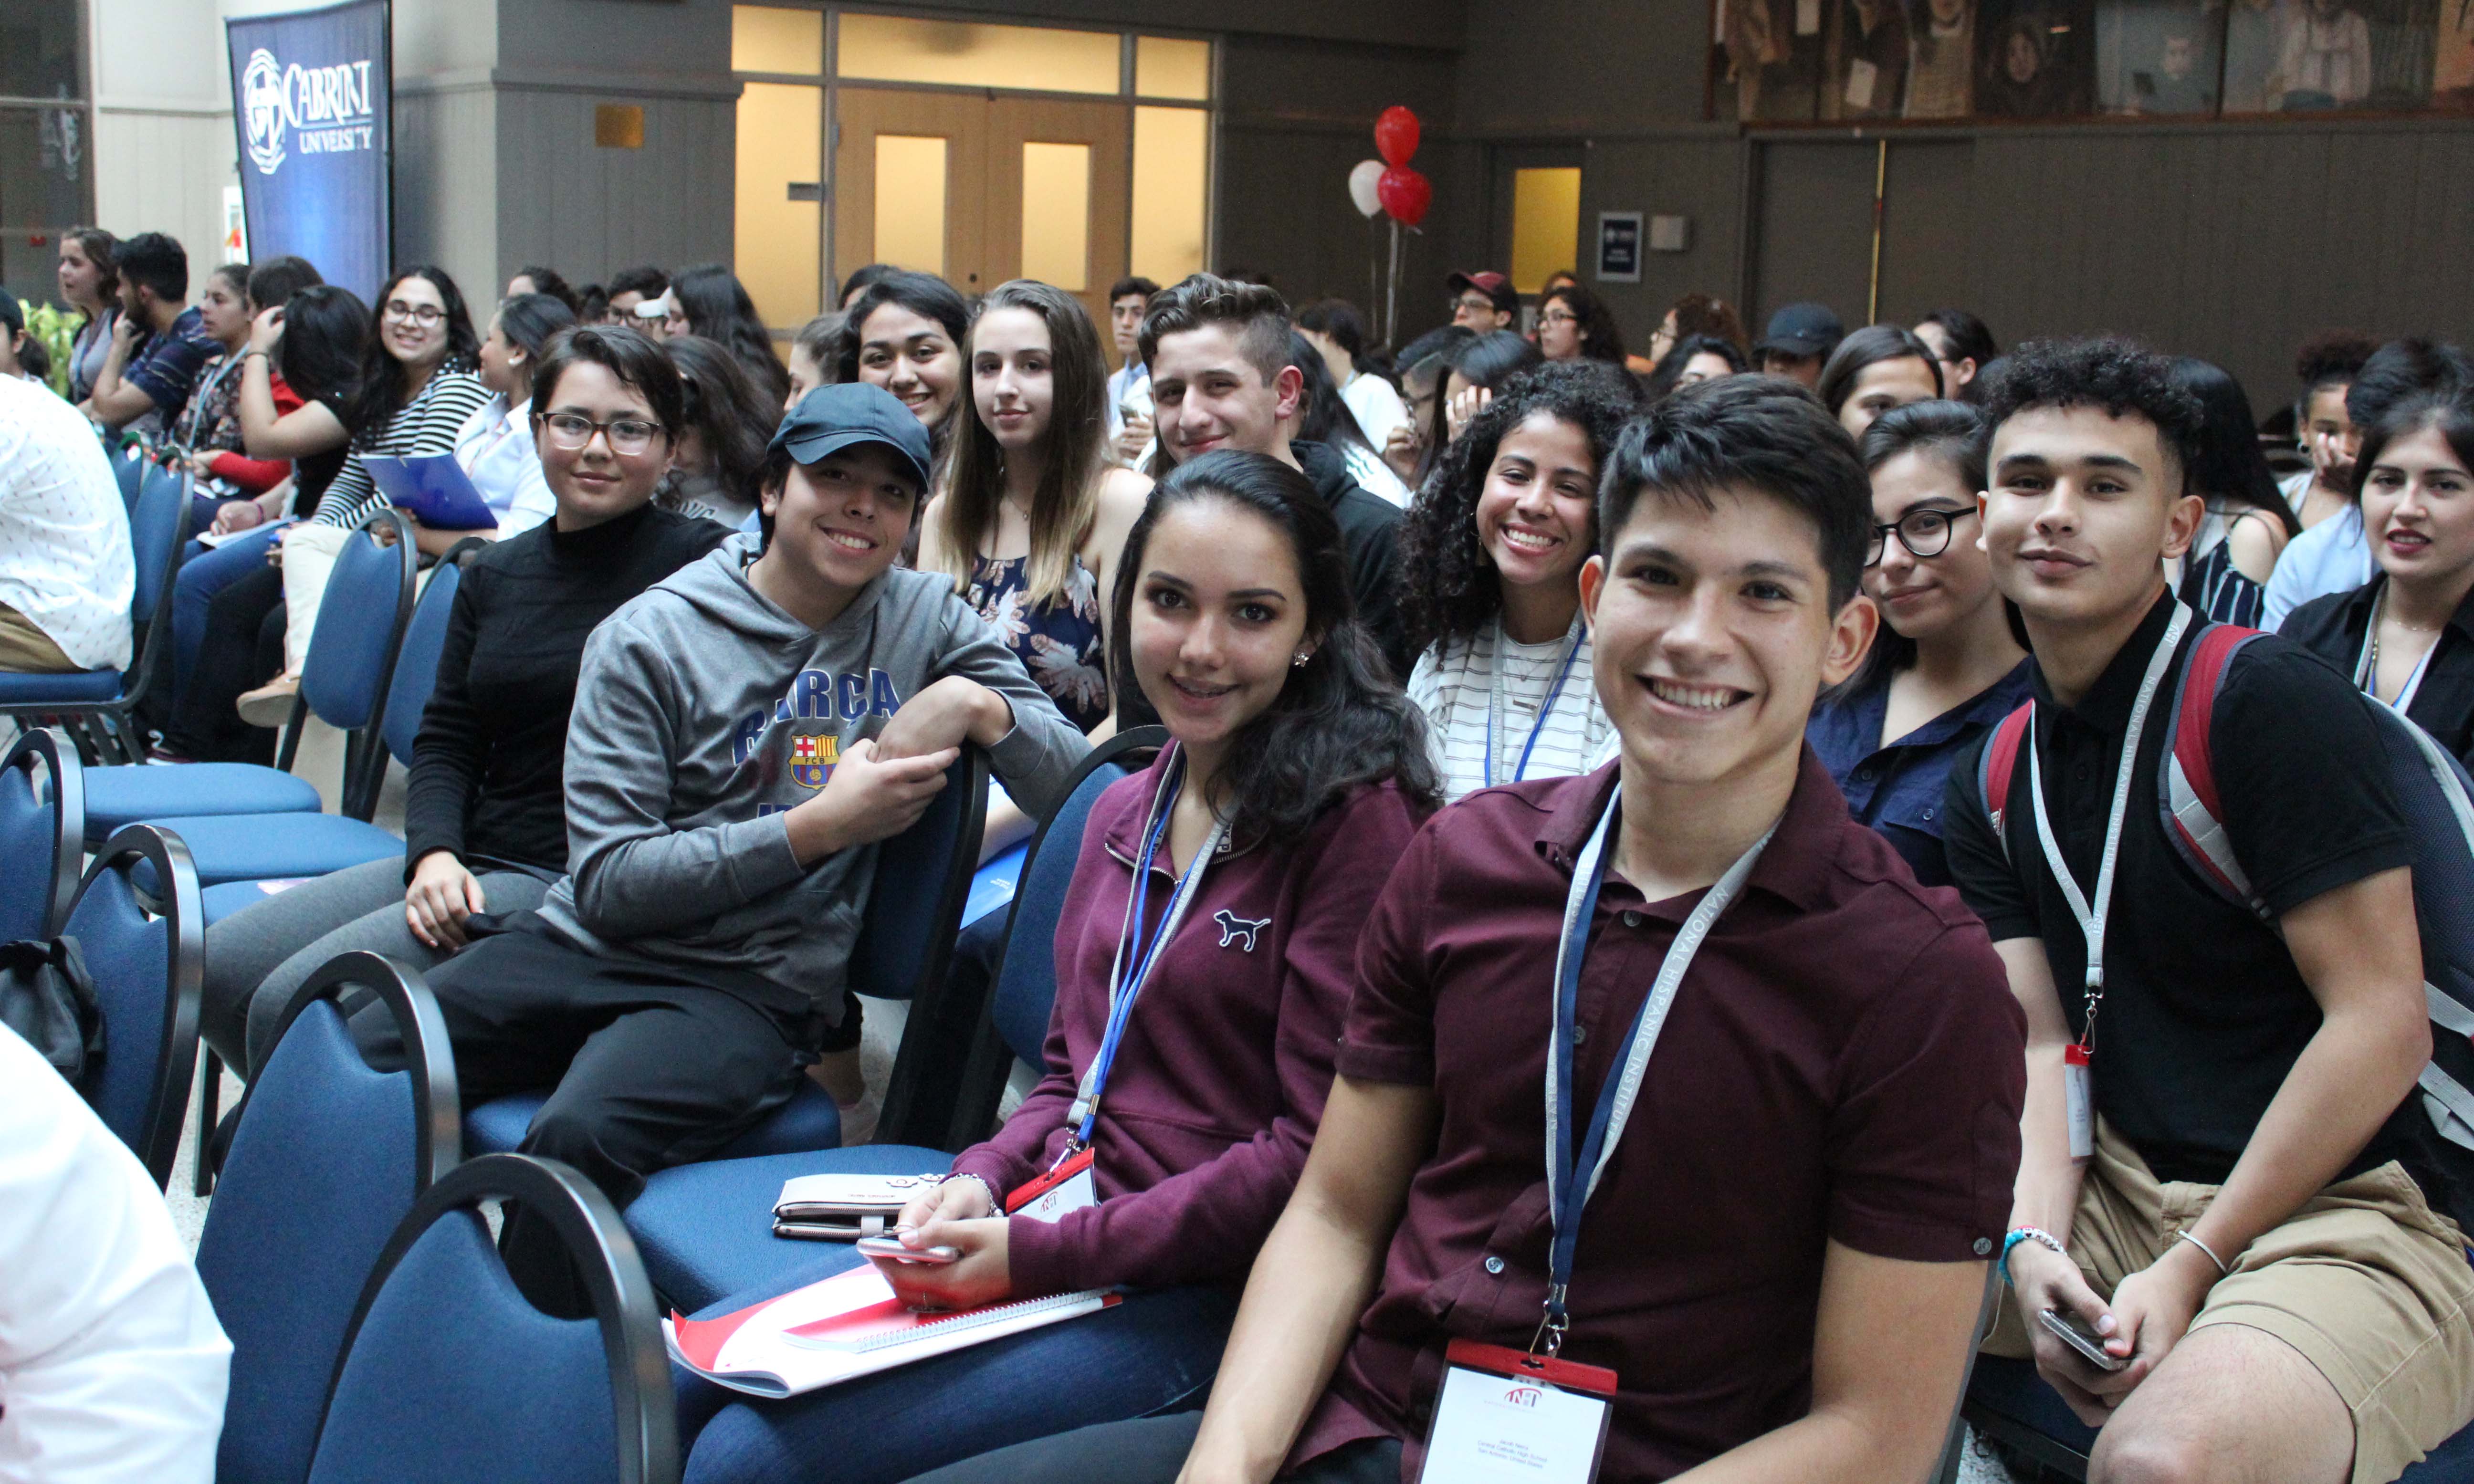 Students at the 2018 Northeast CWS program at Cabrini University